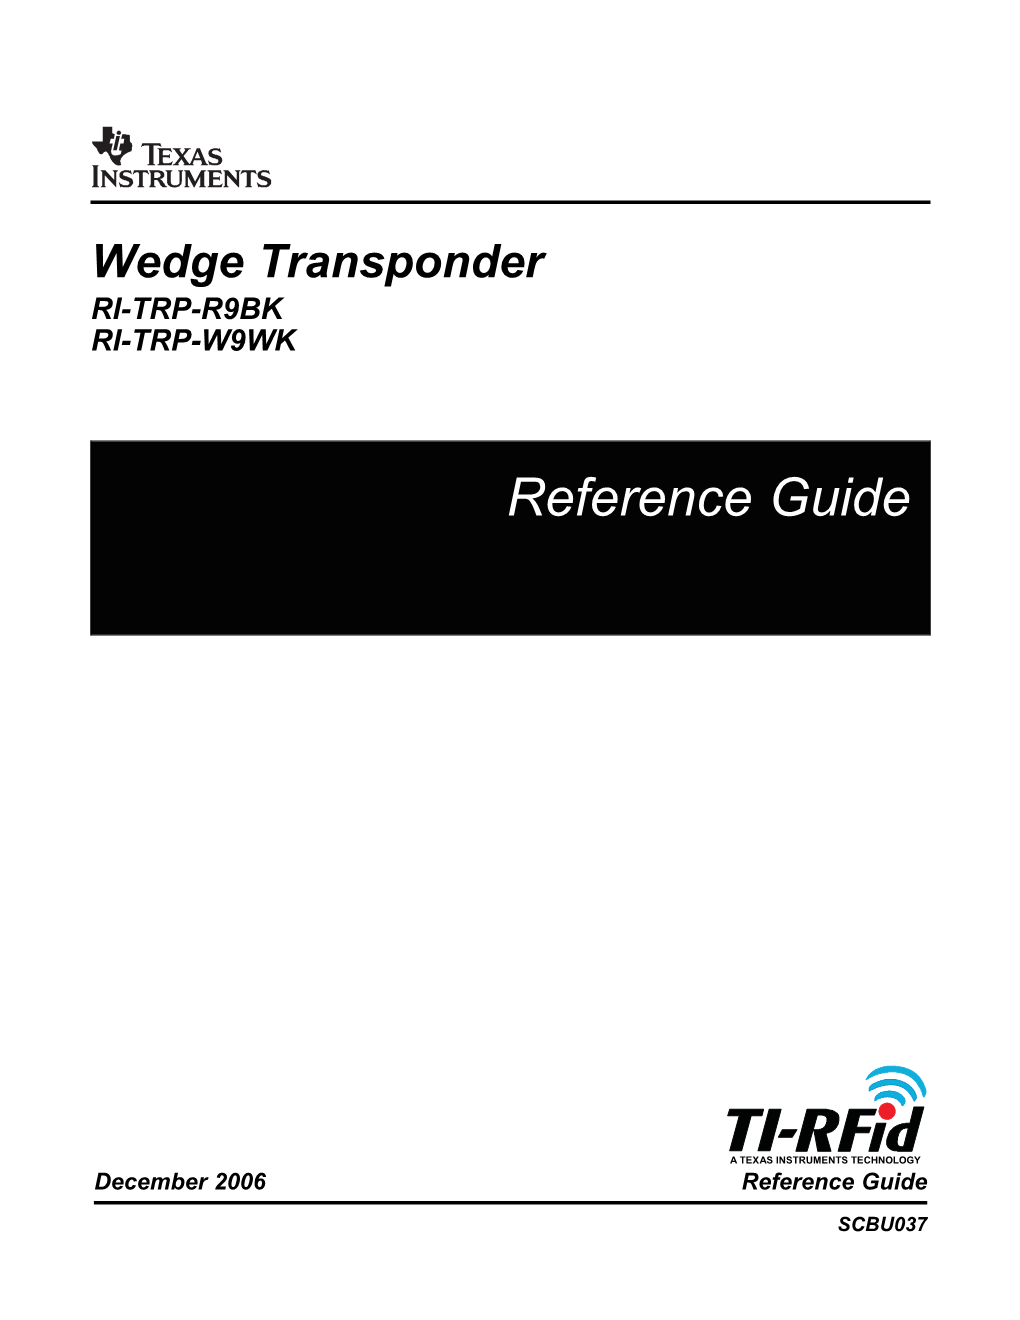 Wedge Transponder RI-TRP-R9BK RI-TRP-W9WK